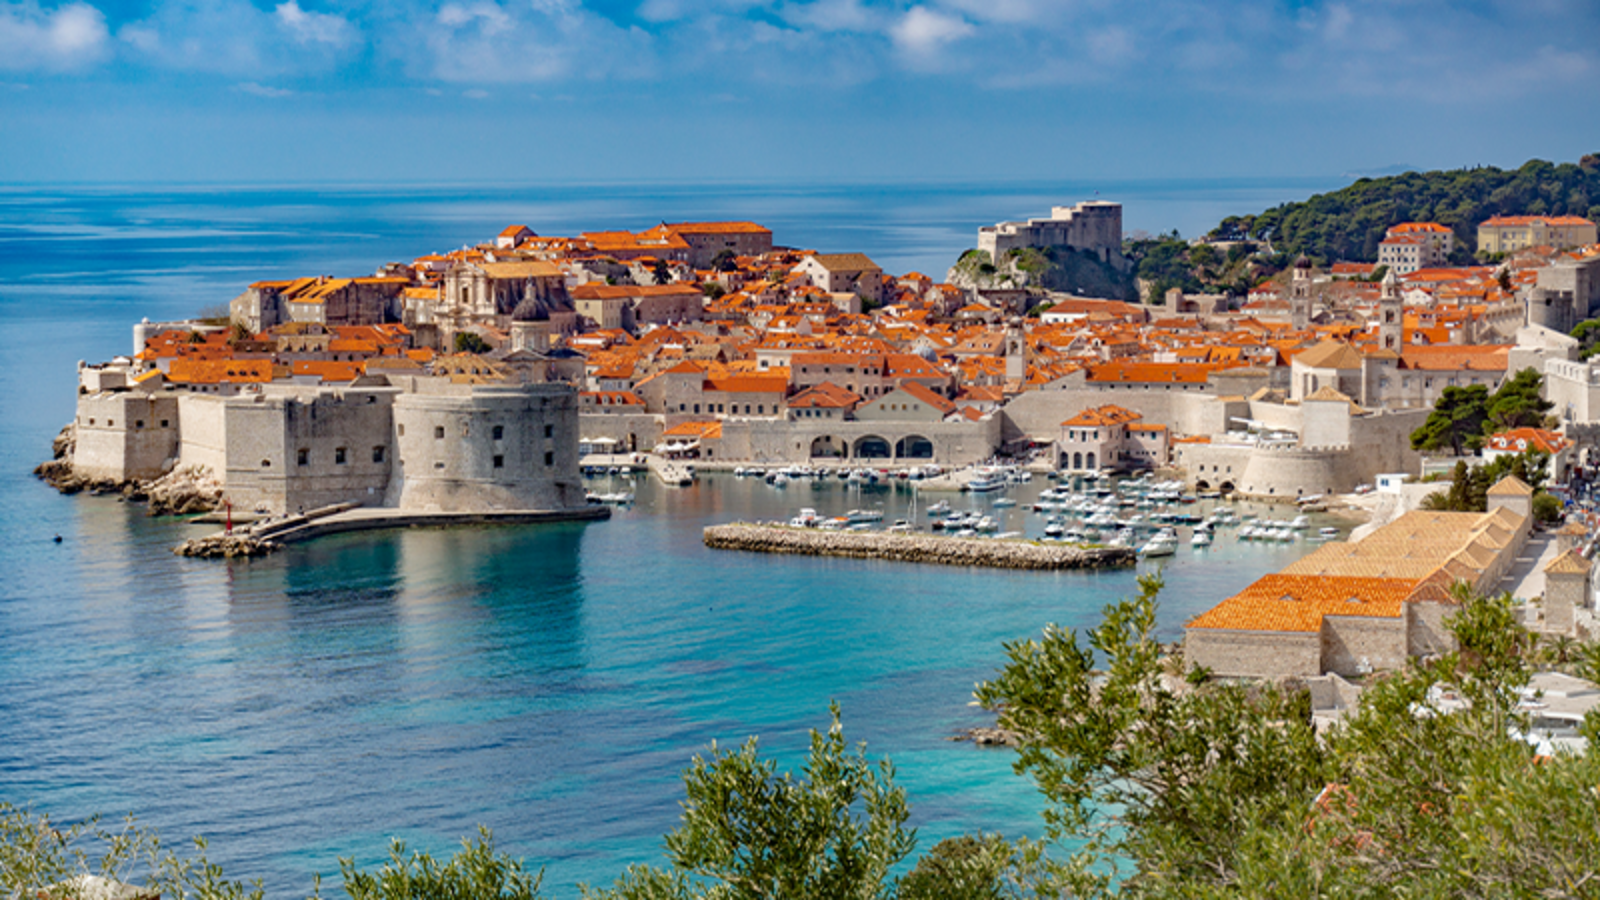 Dubrovnik city - baroque buildings and city walls along a shimmering blue coastline